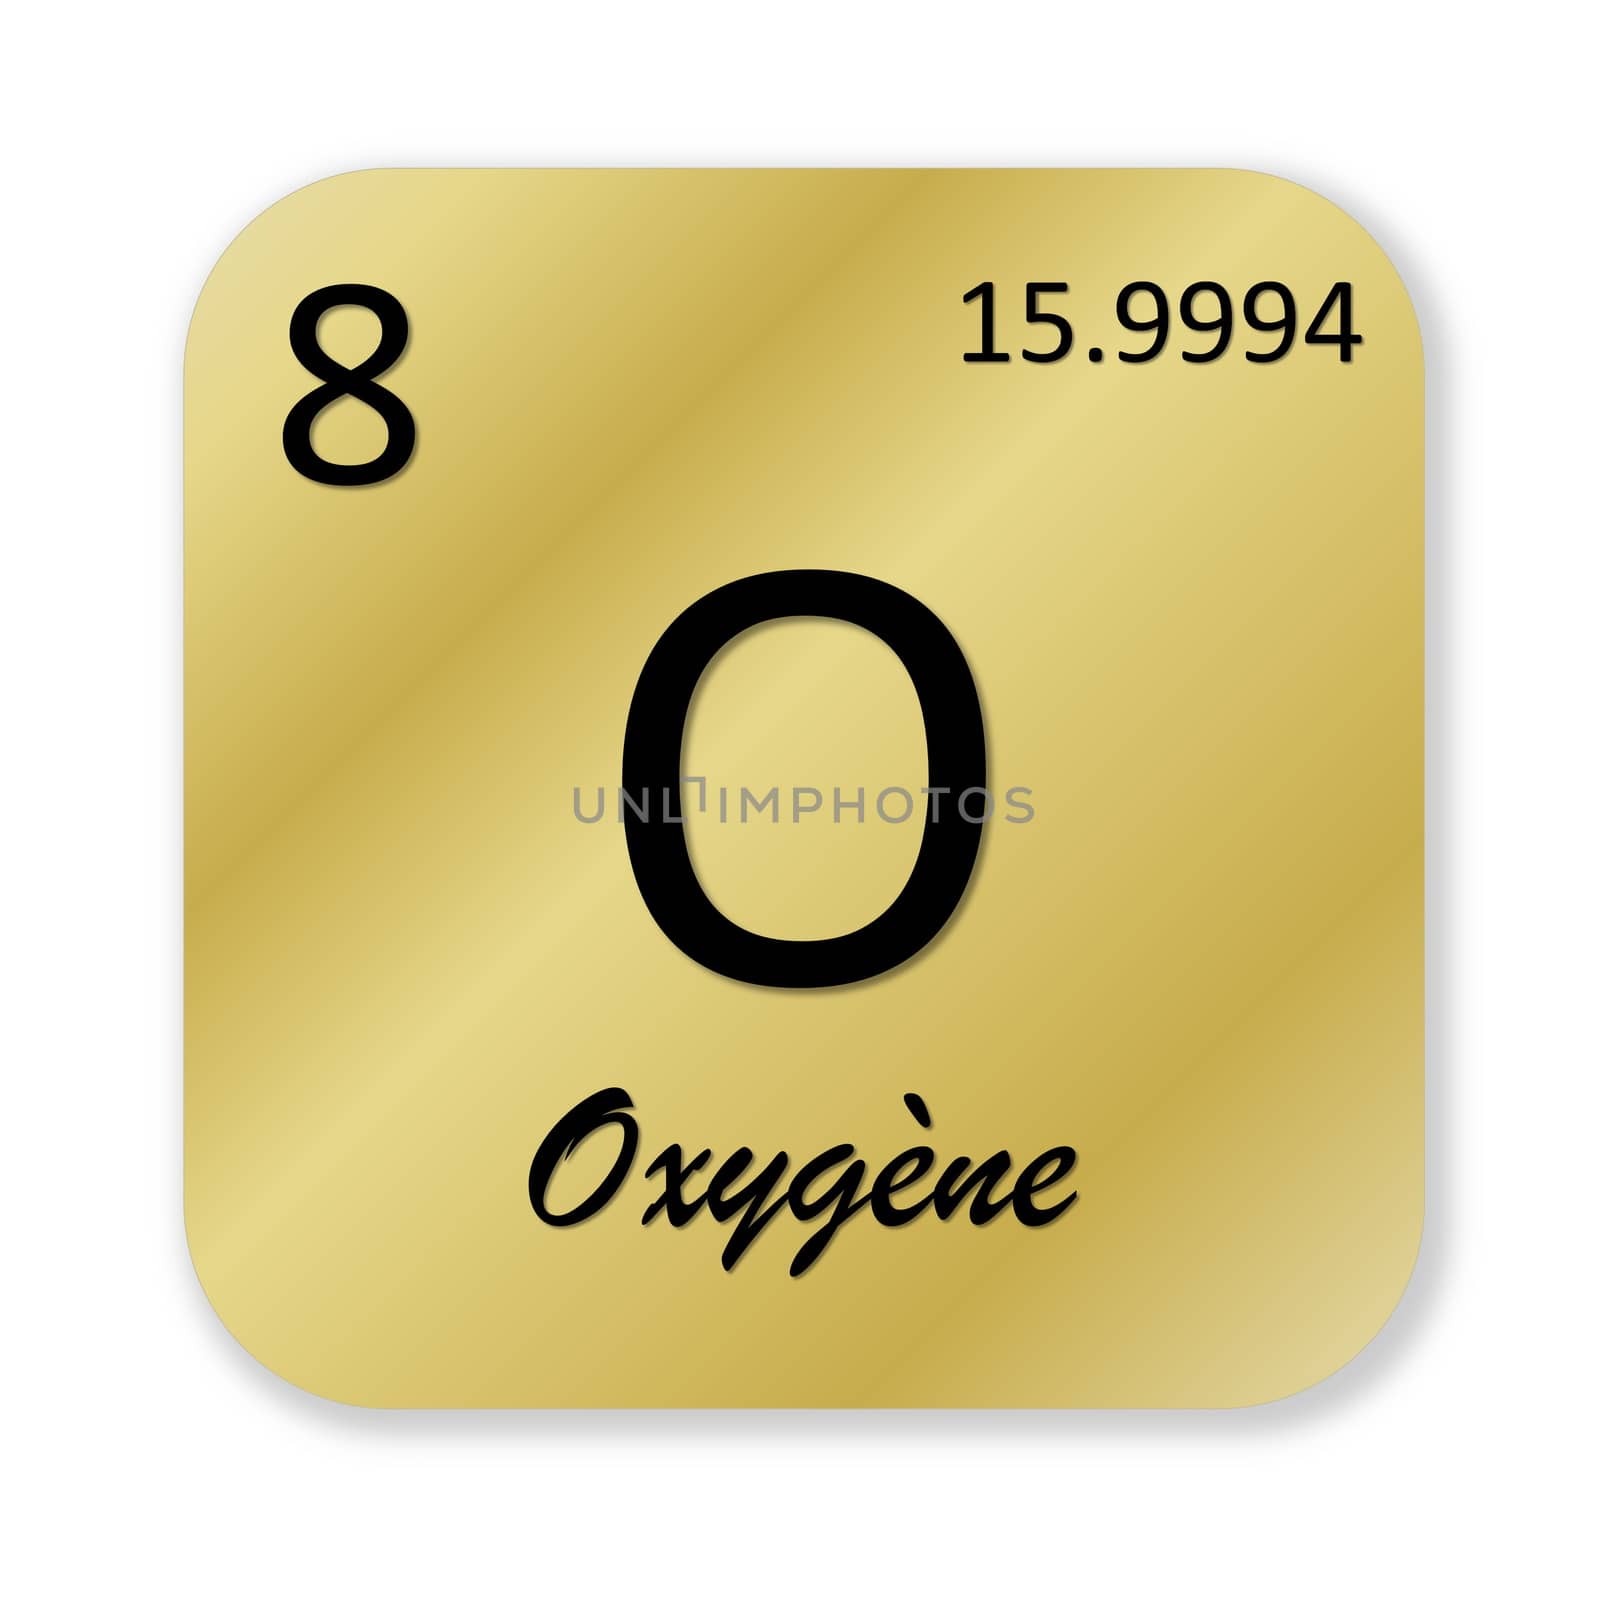 Oxygen element, french oxygene by Elenaphotos21